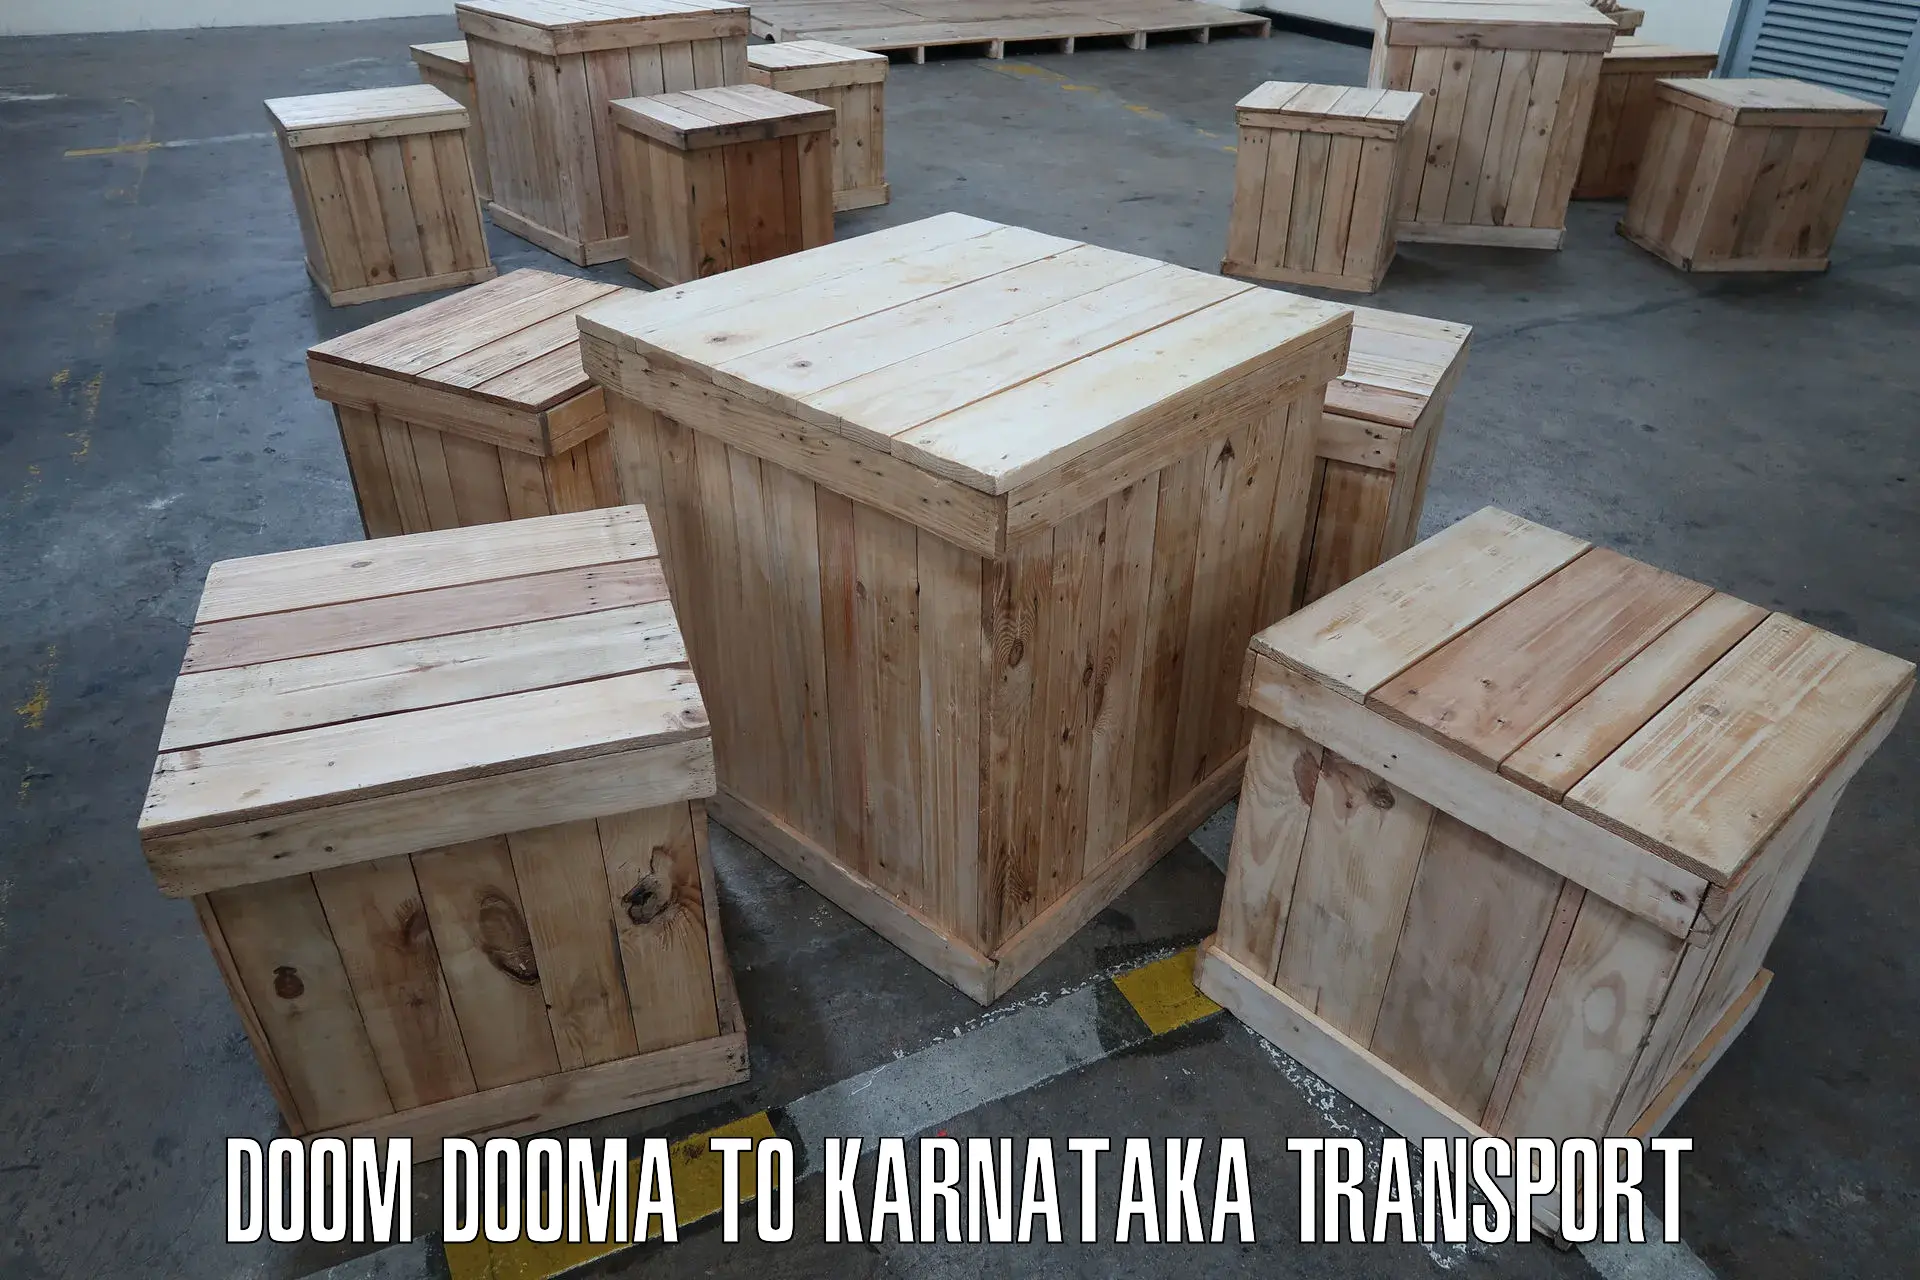 Bike transport service Doom Dooma to Tumkur